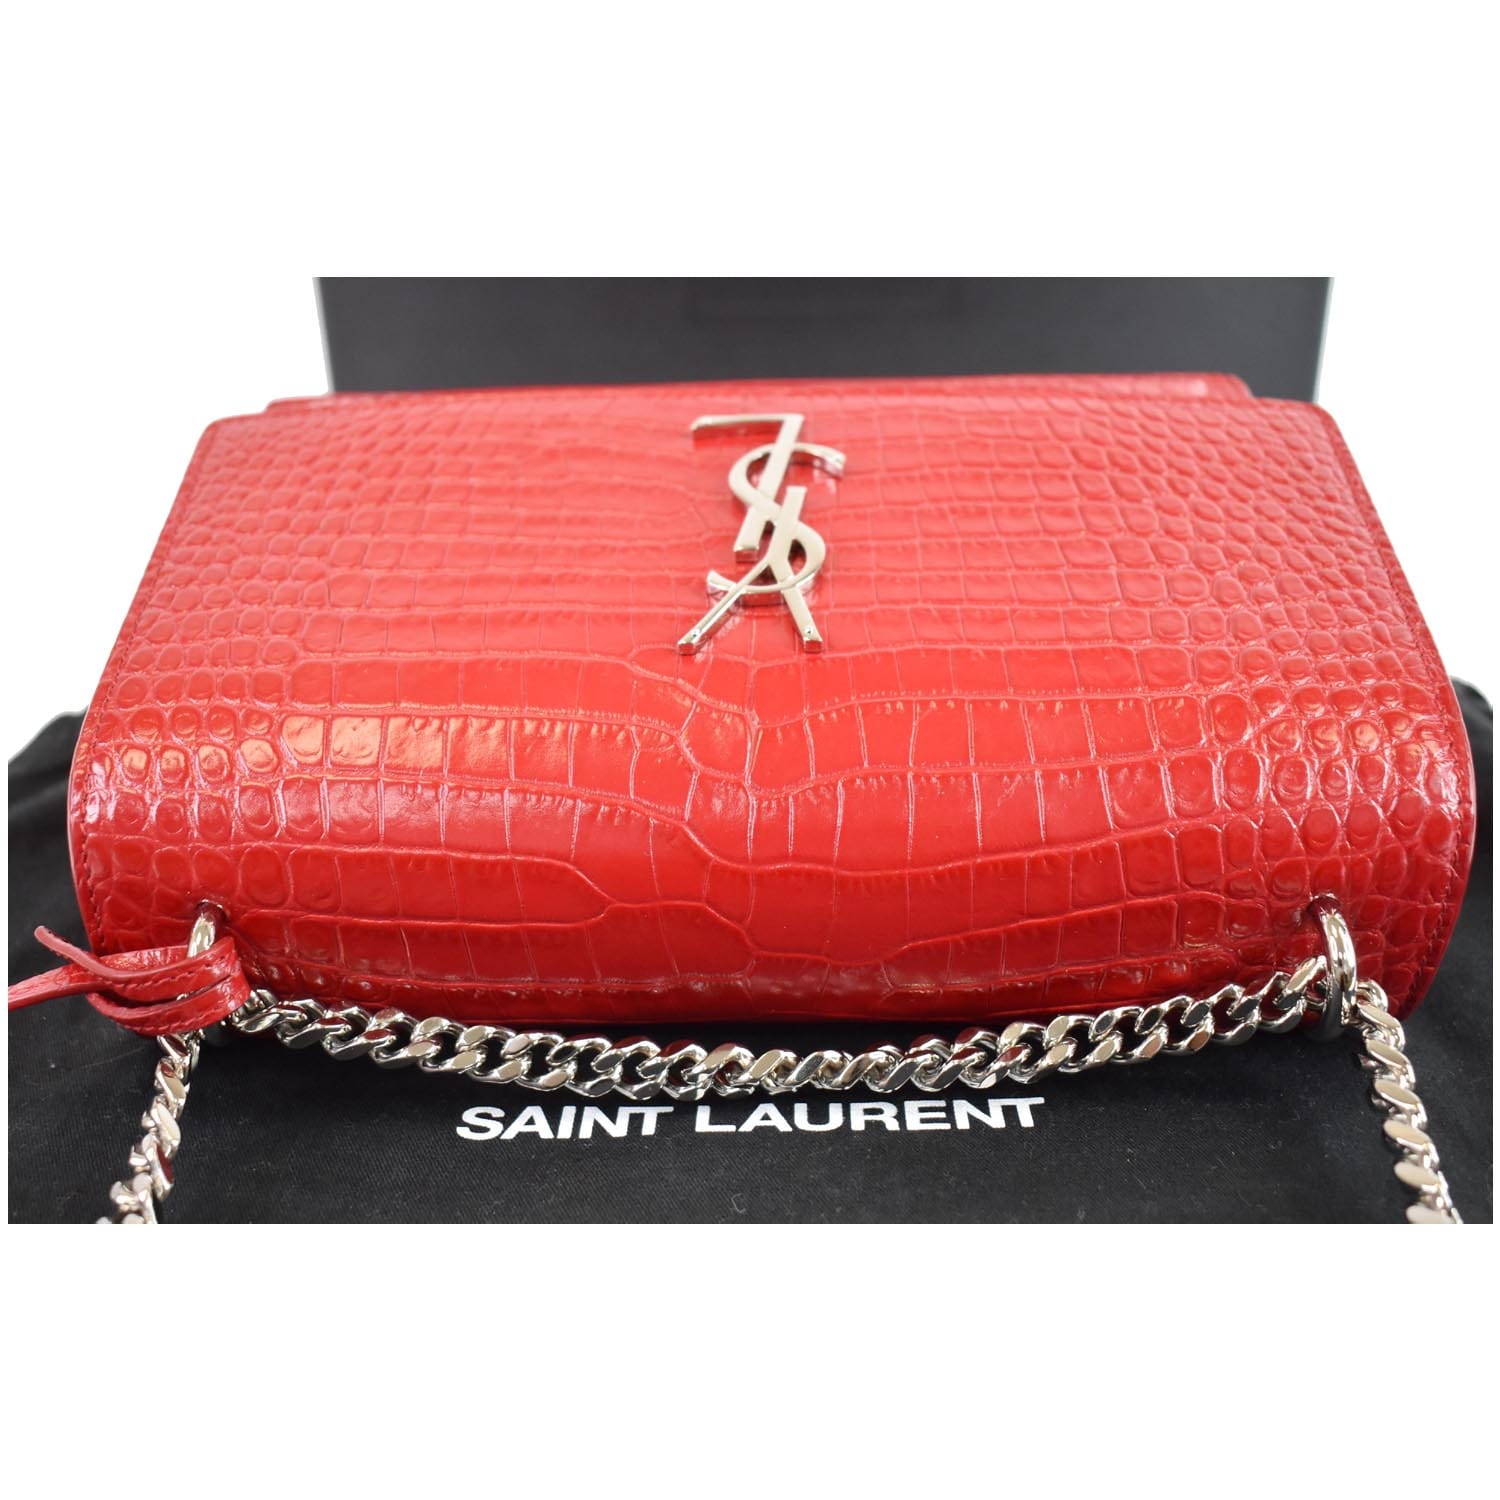 Saint Laurent Sunset Medium Leather Cross-body Bag in Natural